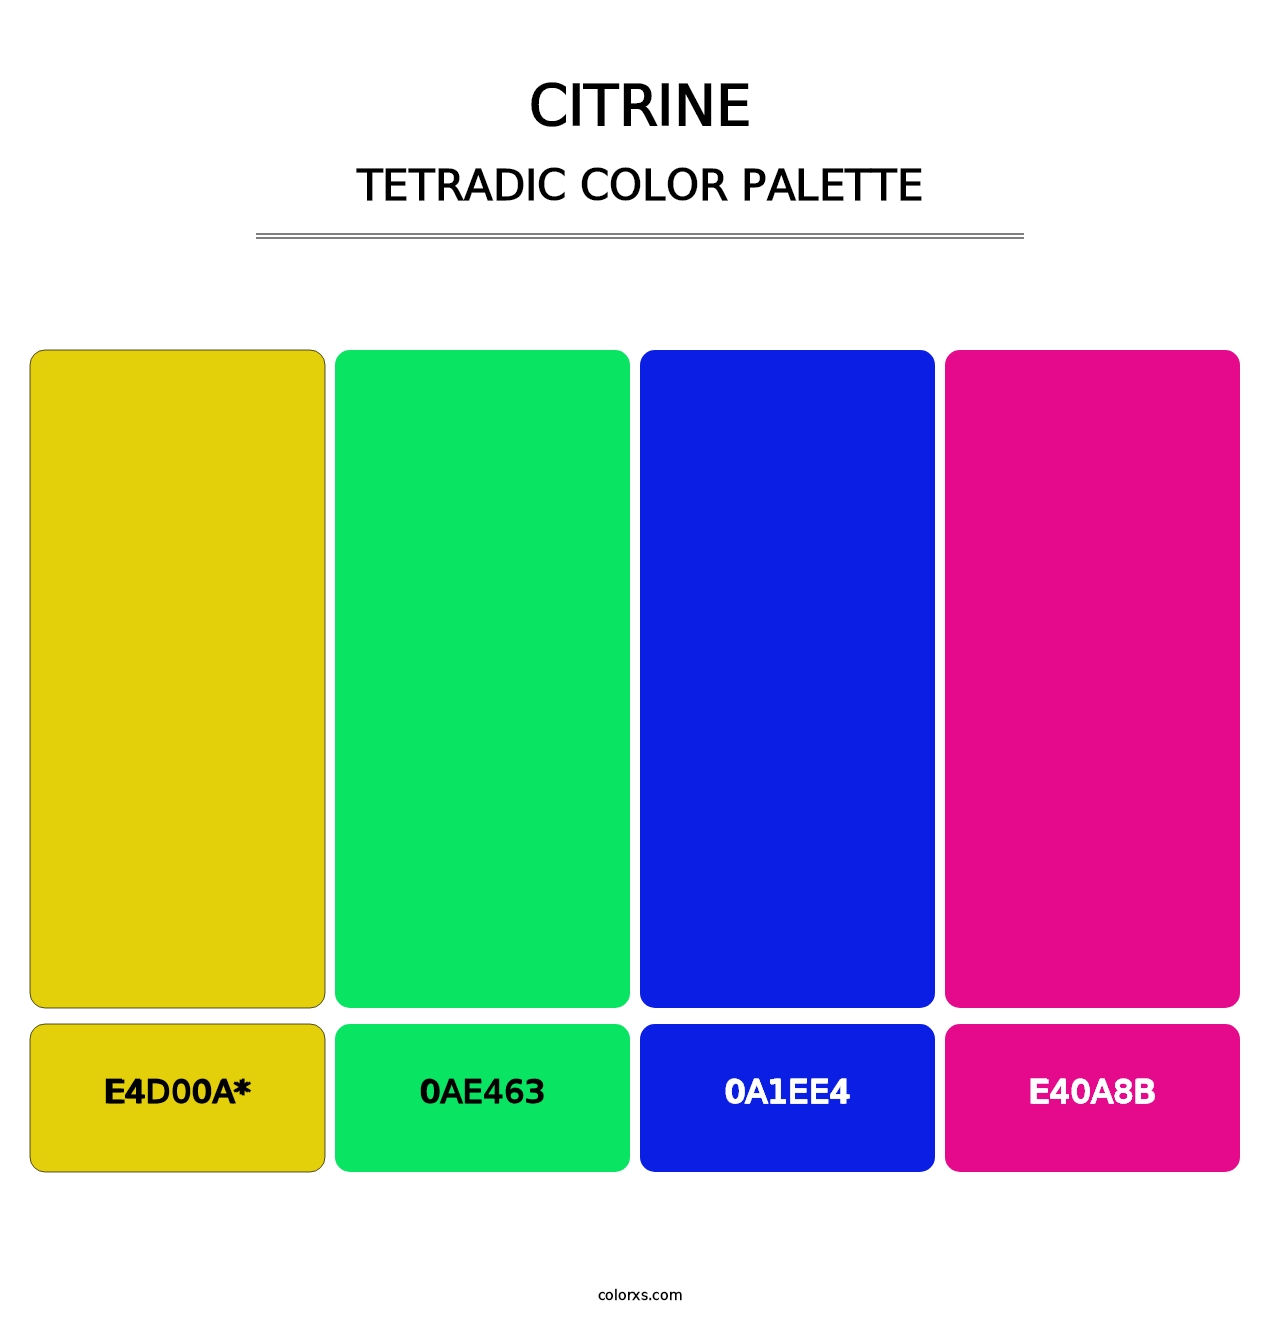 Citrine - Tetradic Color Palette